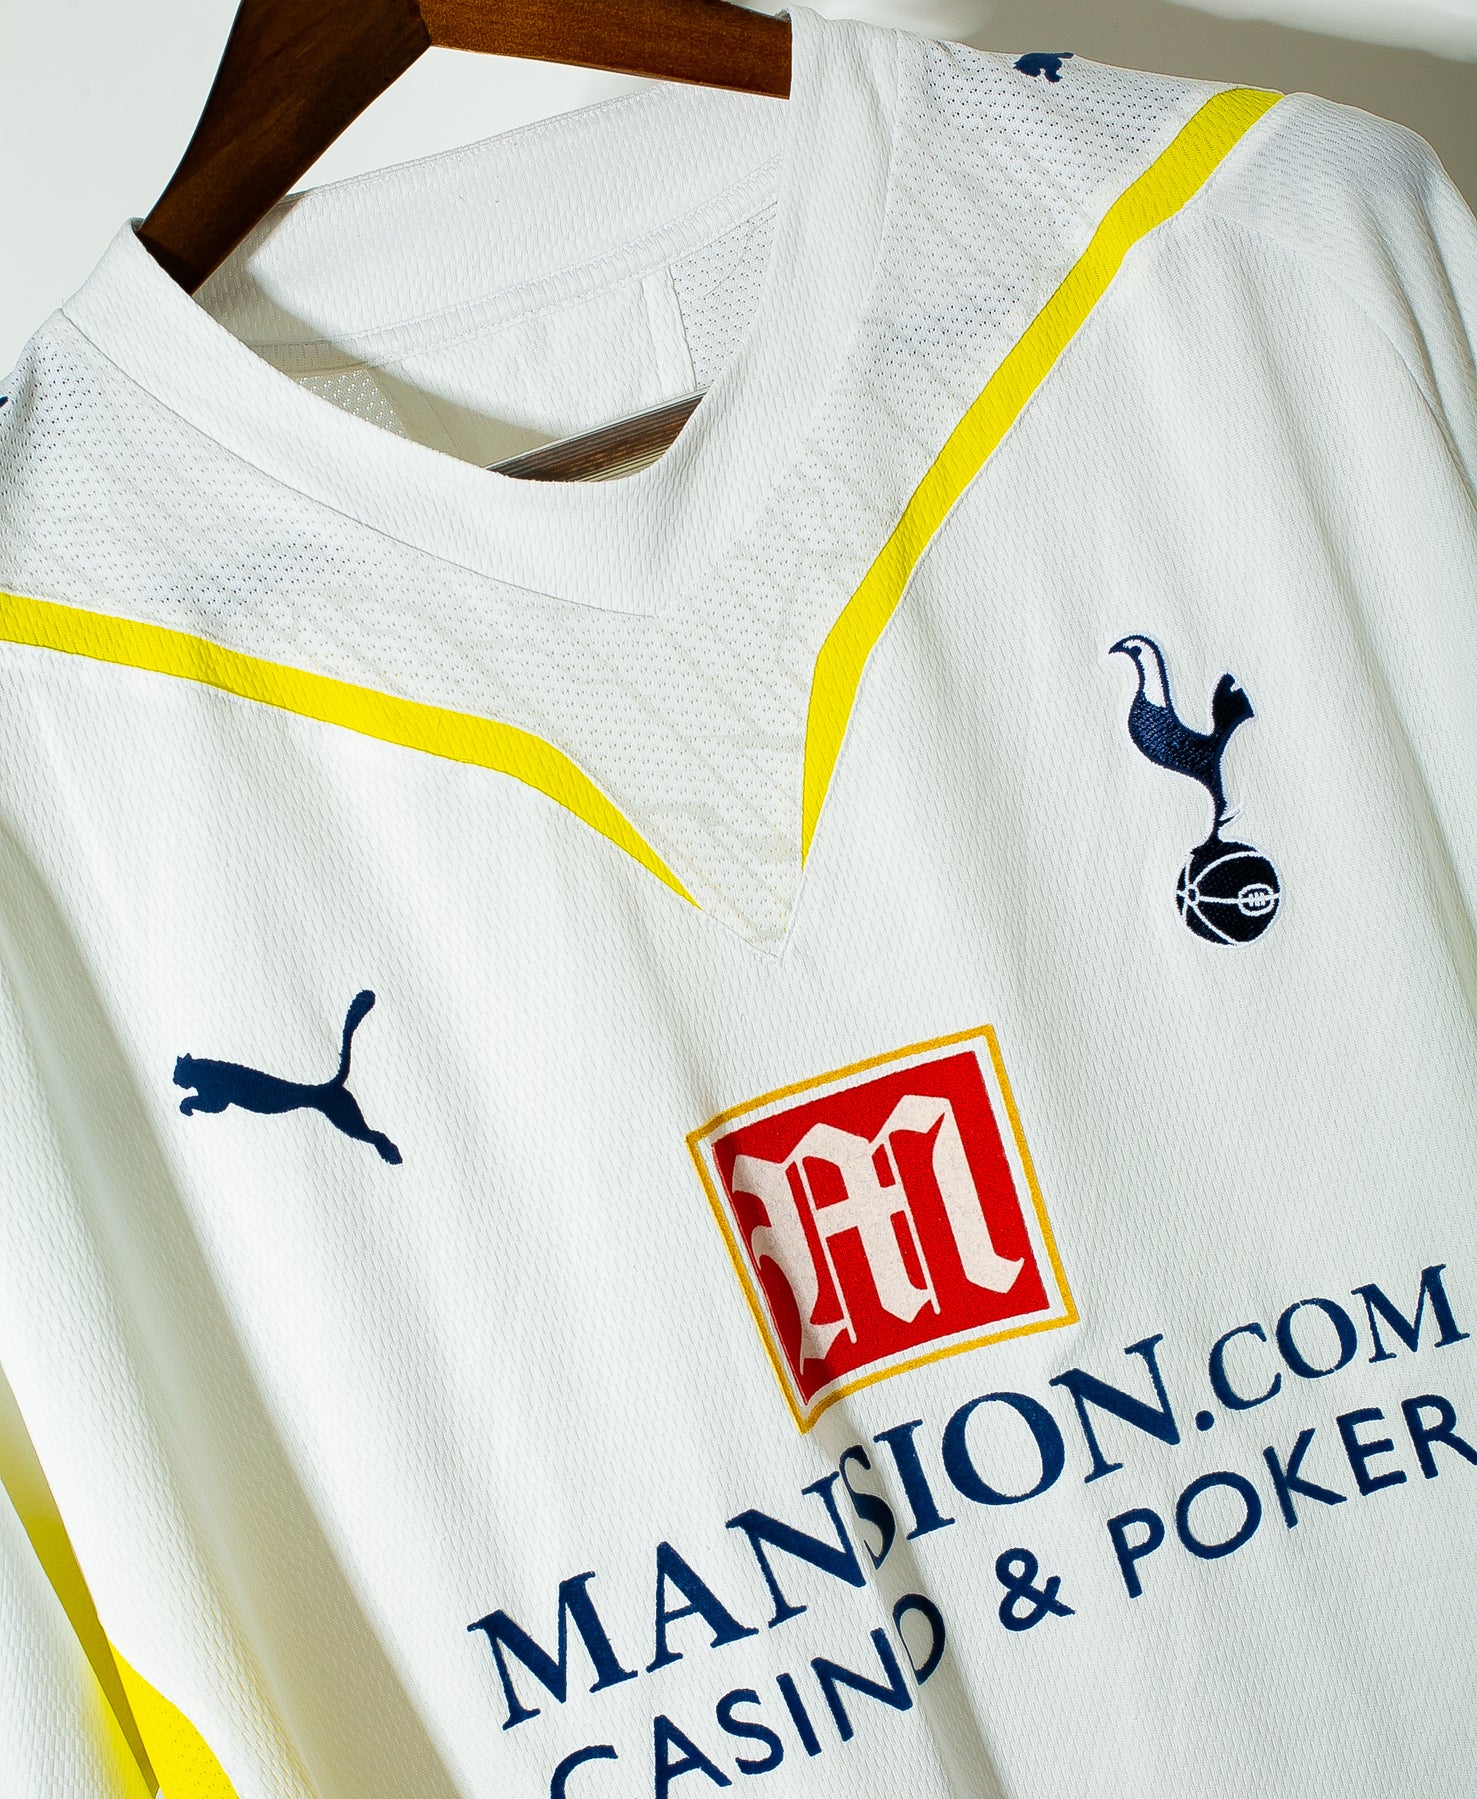 Tottenham Hotspur Home football shirt 2009 - 2010. Sponsored by Mansion